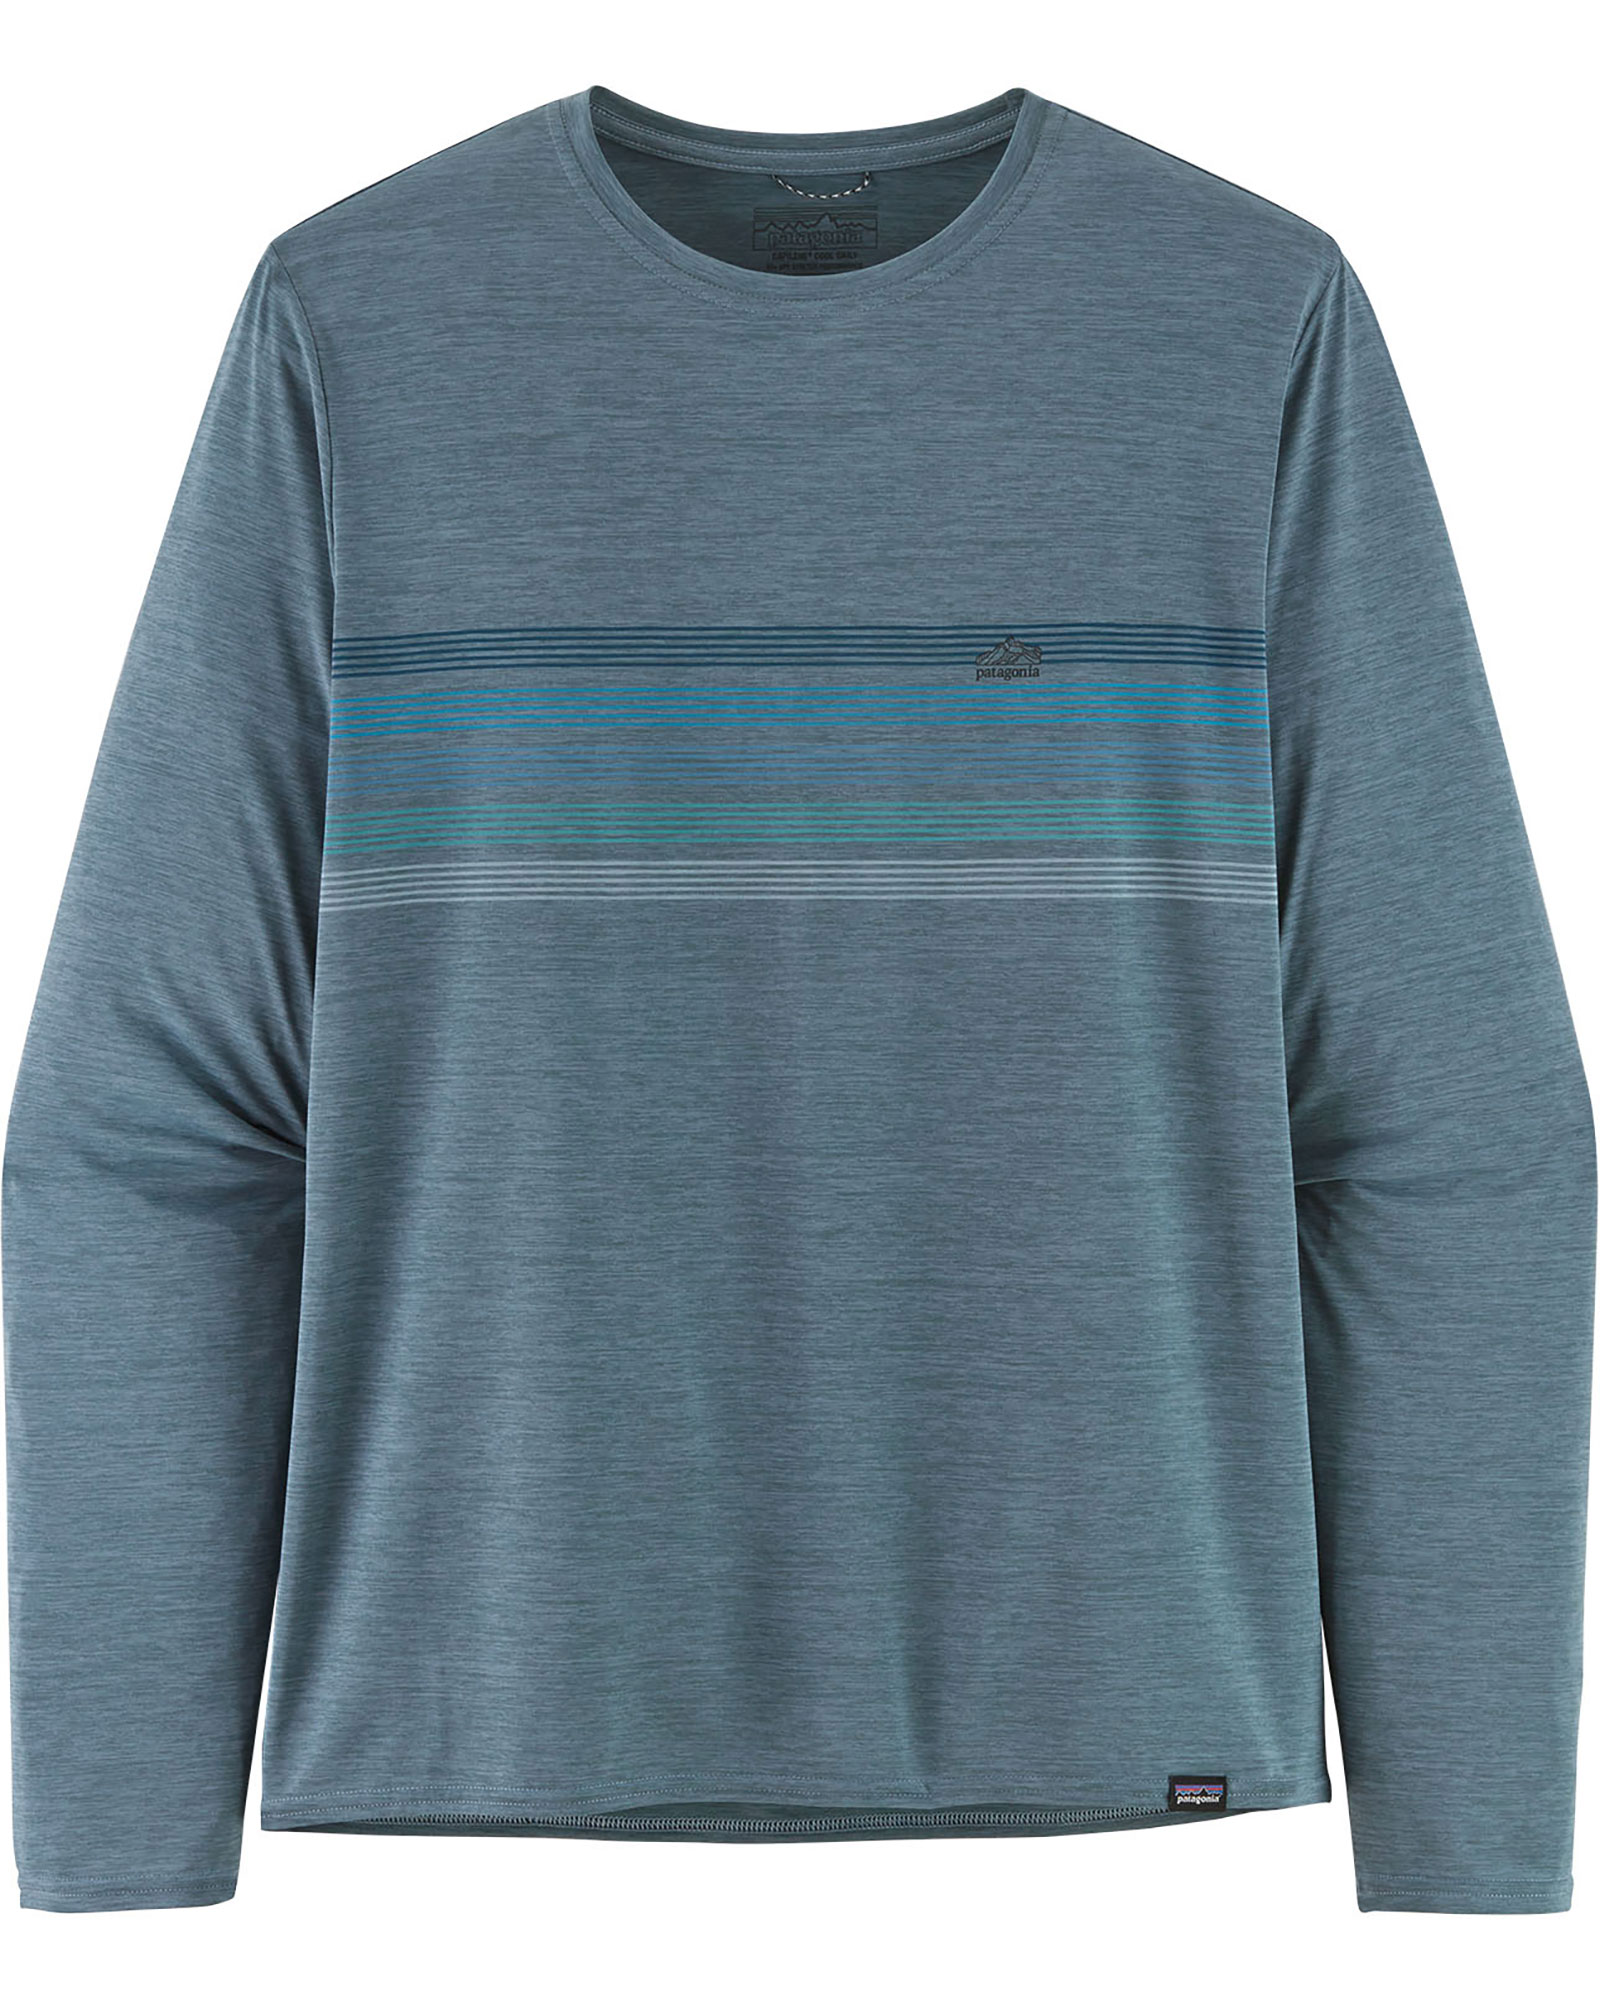 Patagonia Long Sleeve Cap Cool Daily Graphic Men’s T Shirt - Light Plume Grey/ Line Logo M